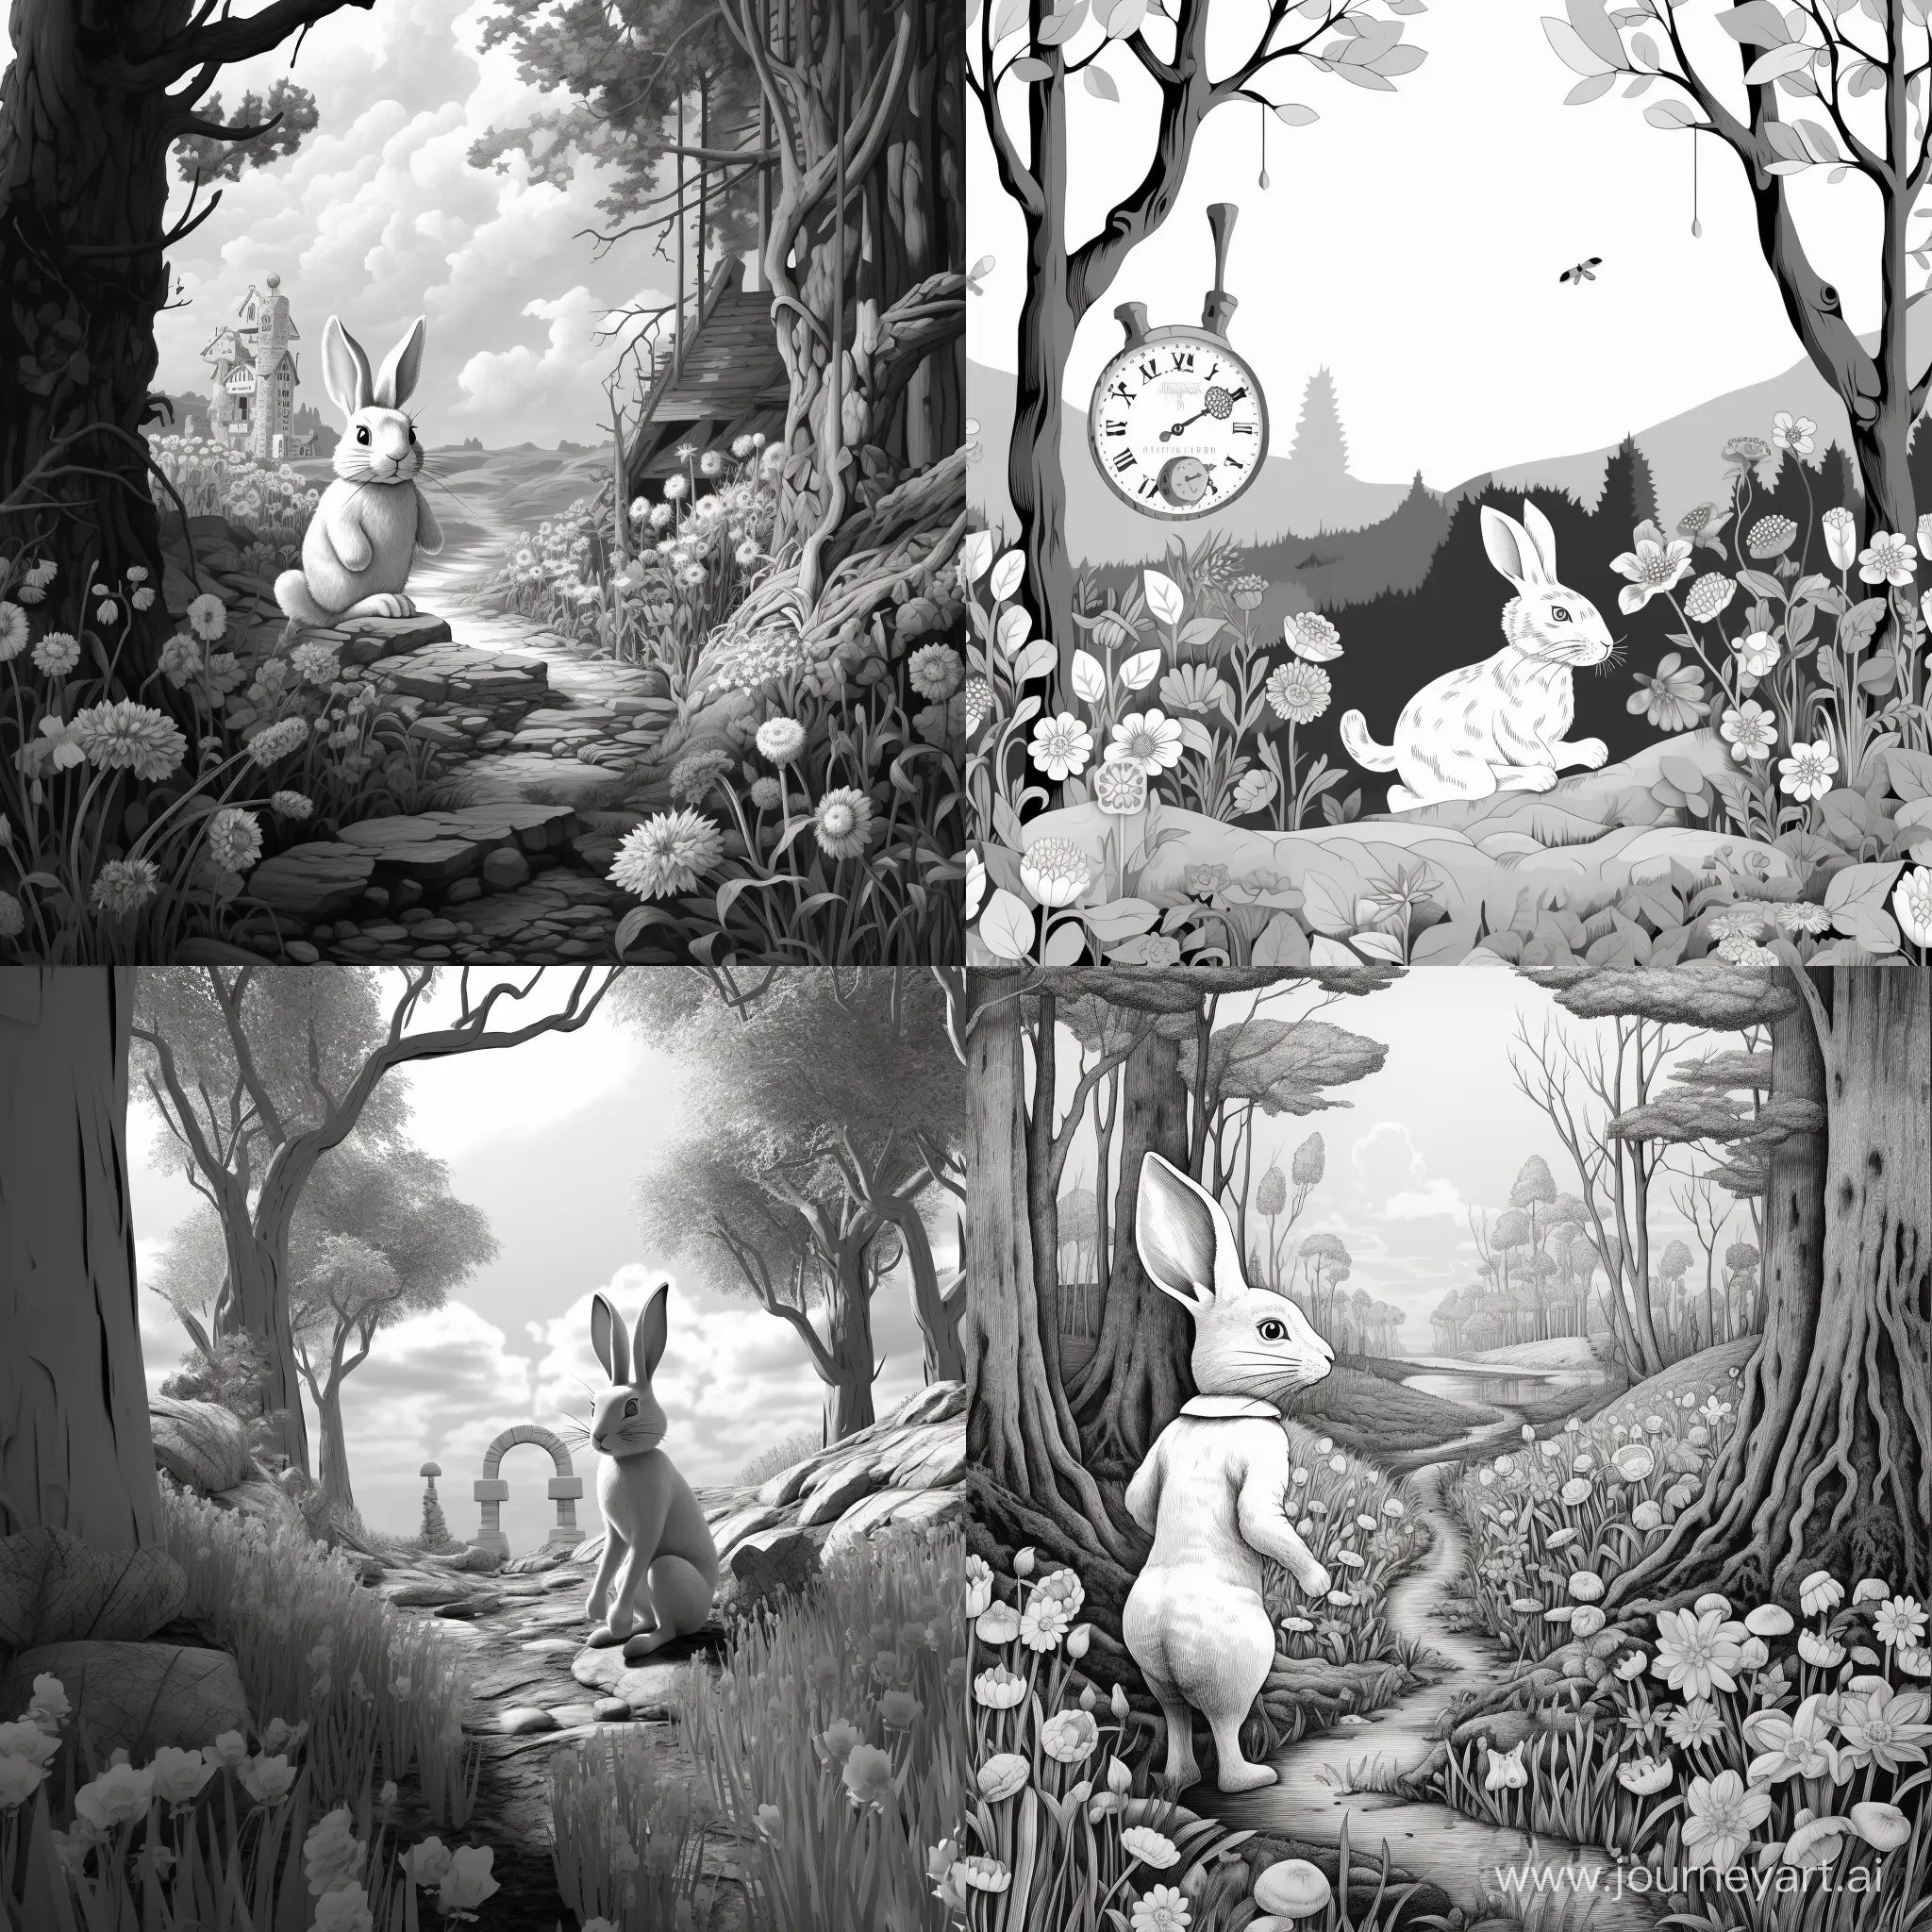 Energetic-White-Rabbit-Racing-Through-Enchanting-Monochrome-Forest